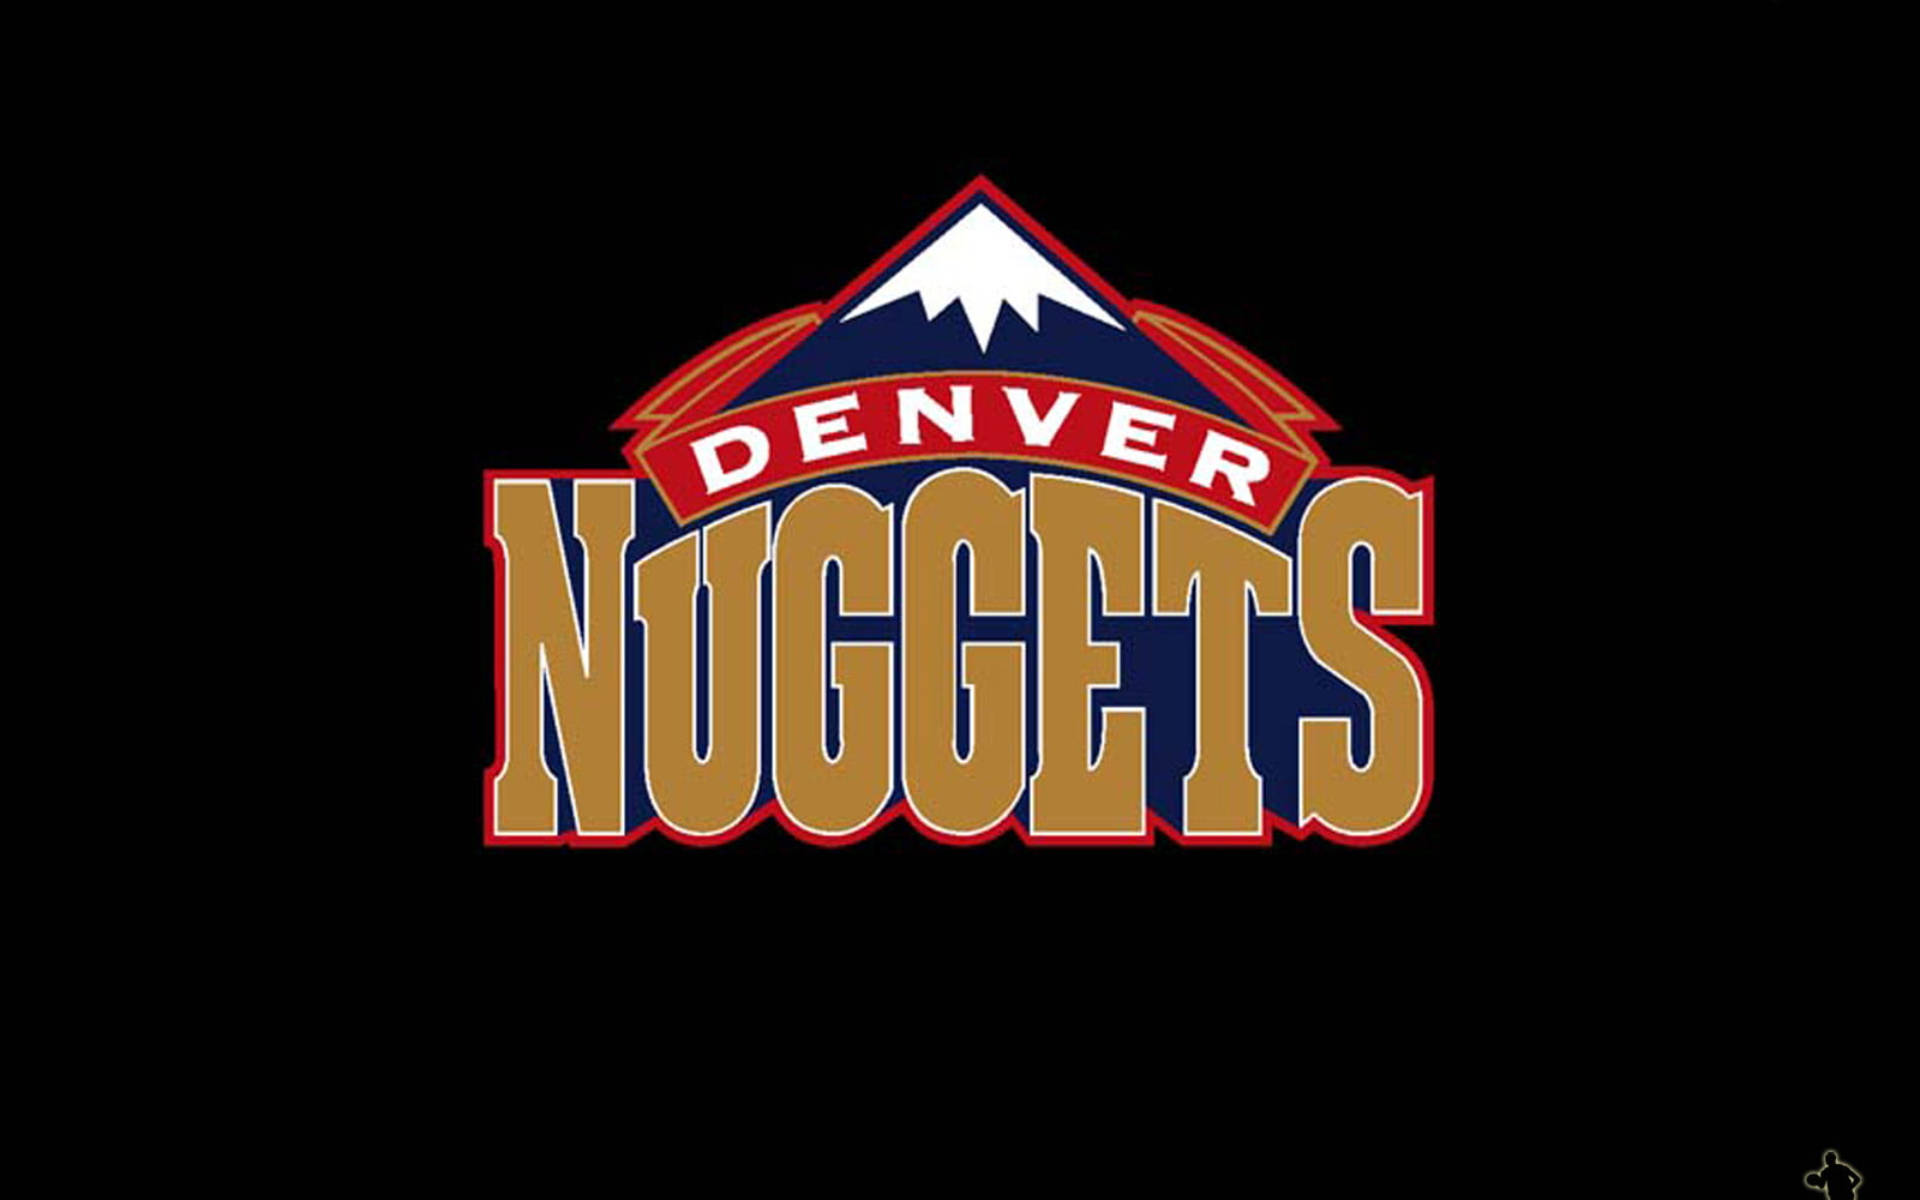 100+] Denver Nuggets Wallpapers